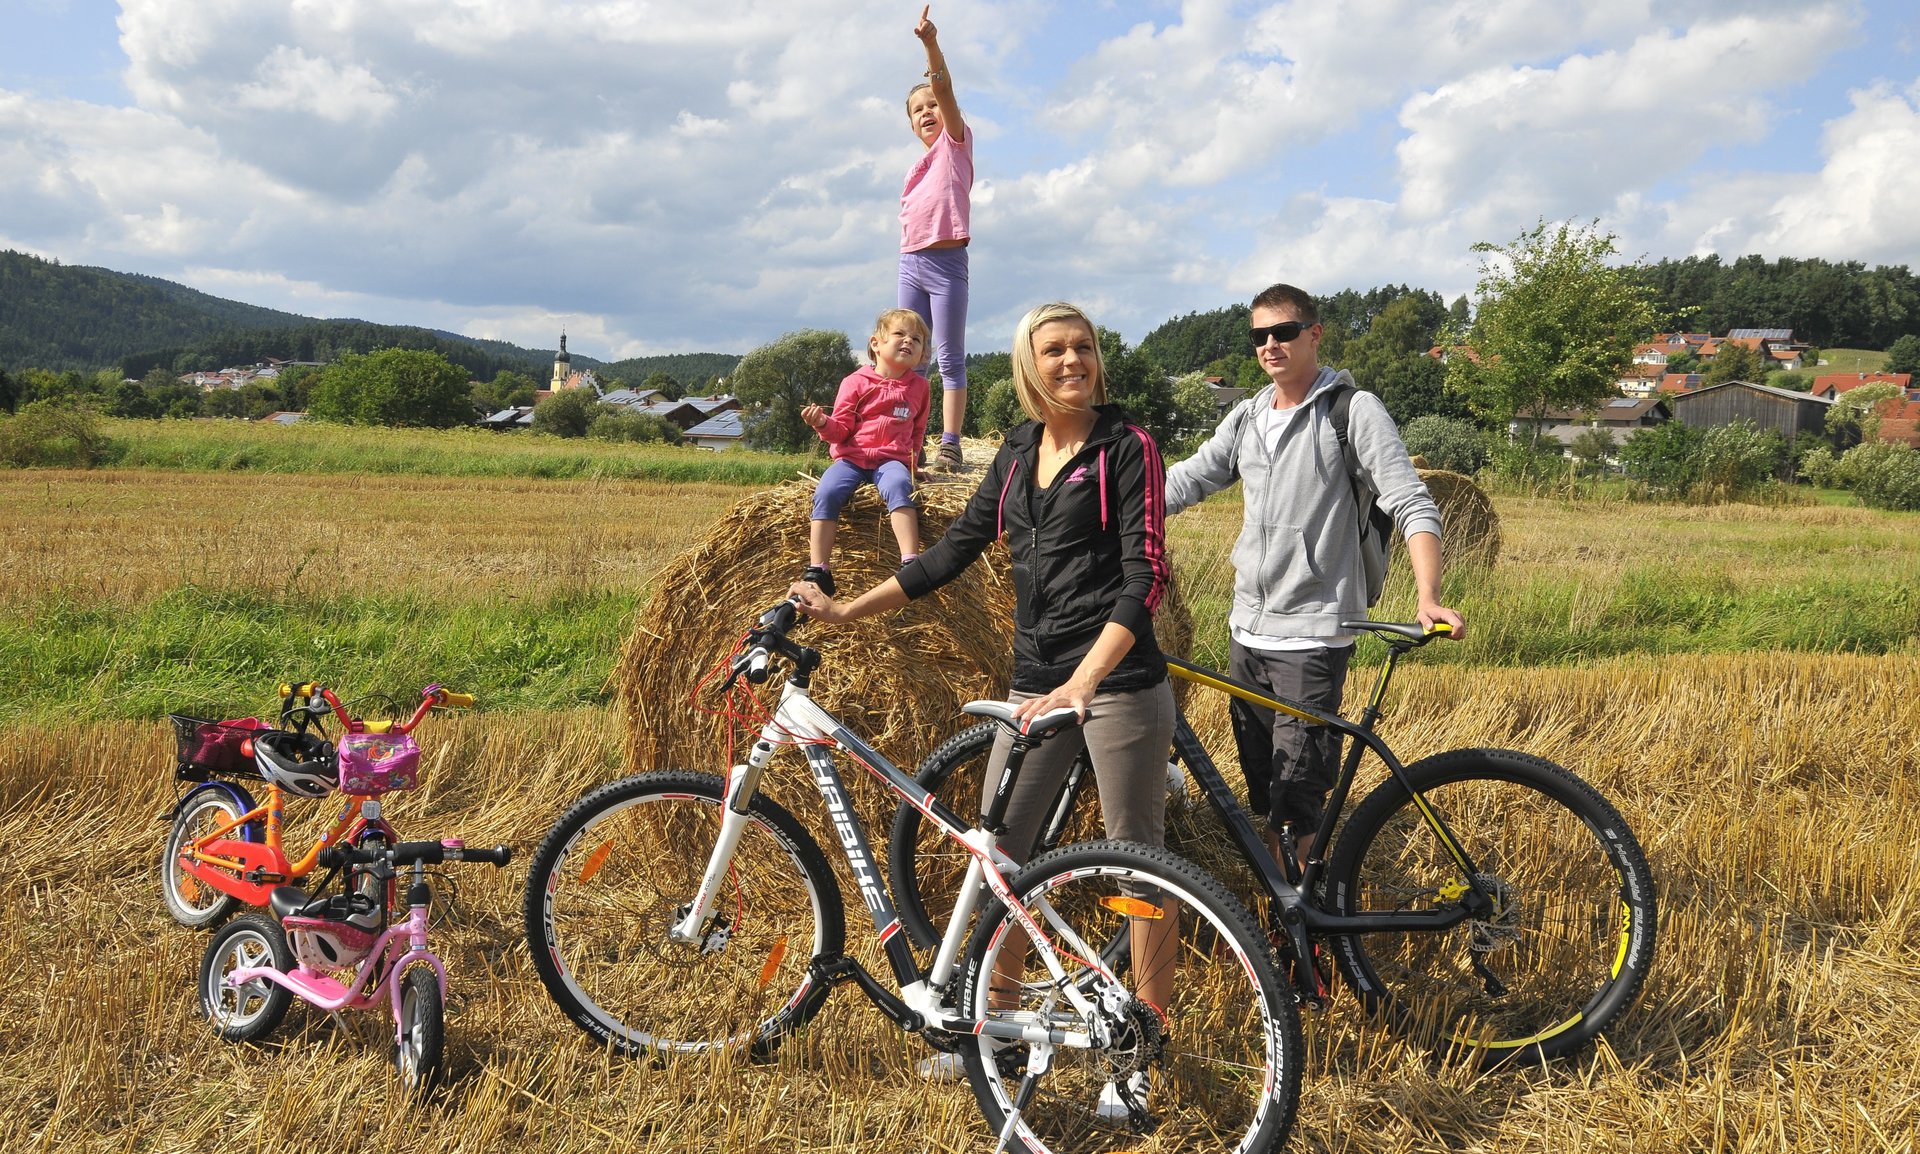 Familienausflug mit dem Rad bei Blaibach